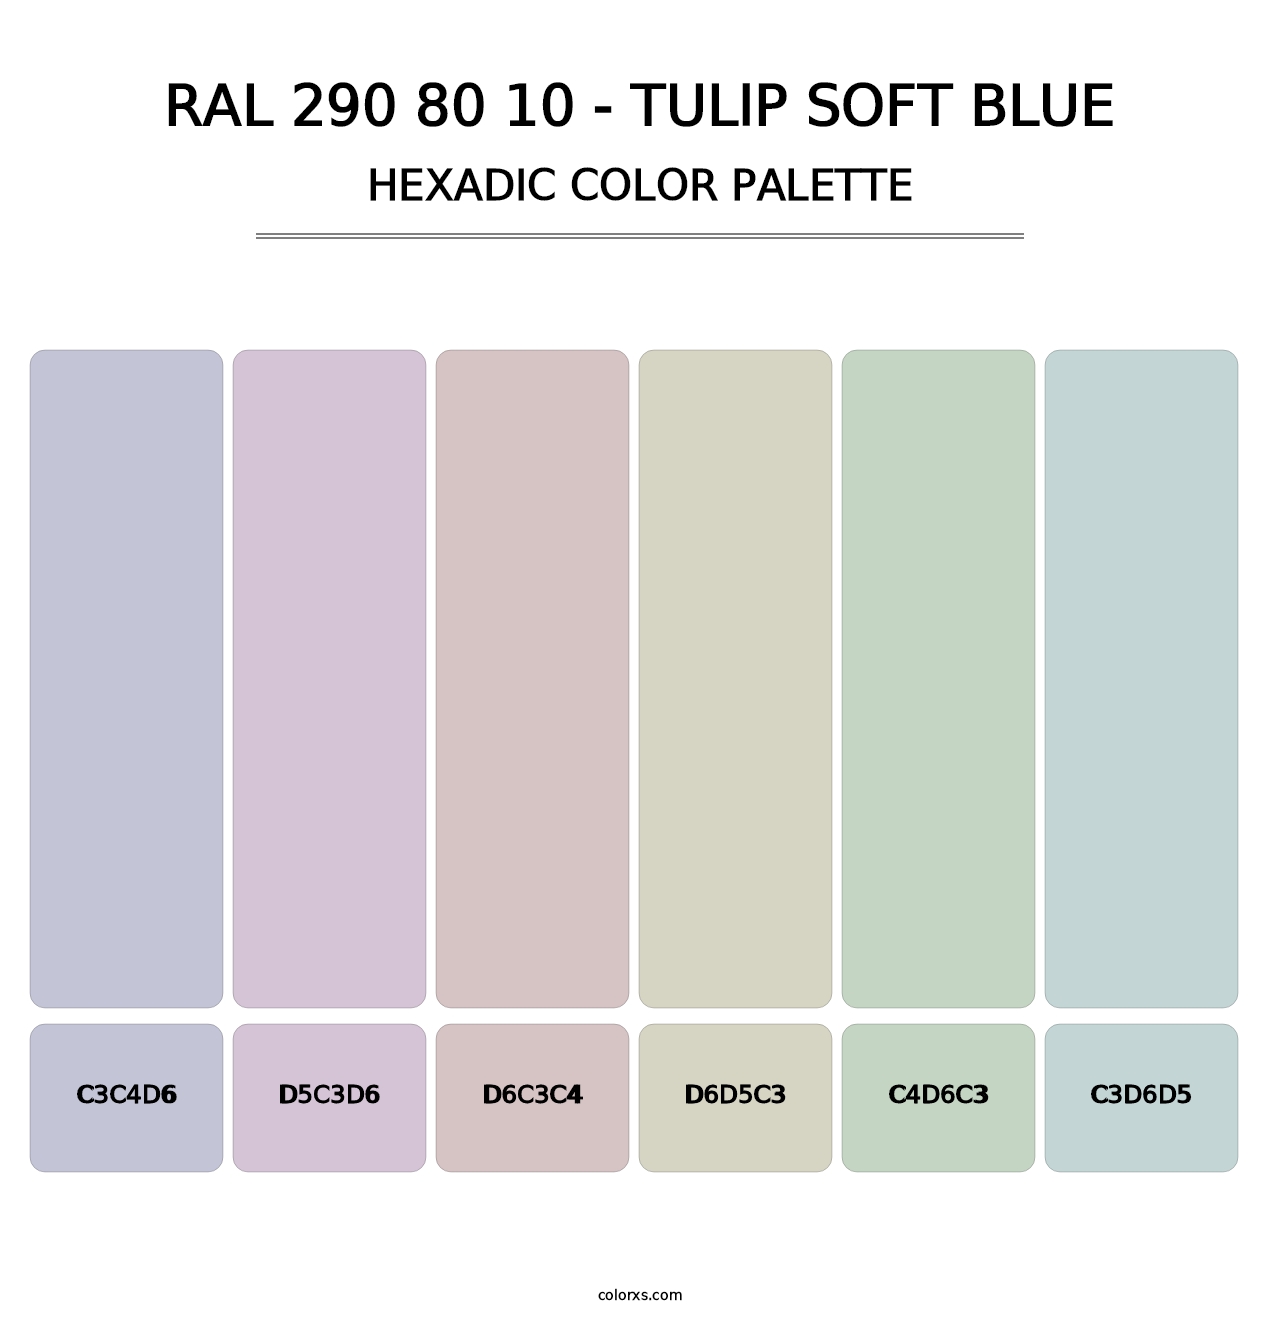 RAL 290 80 10 - Tulip Soft Blue - Hexadic Color Palette